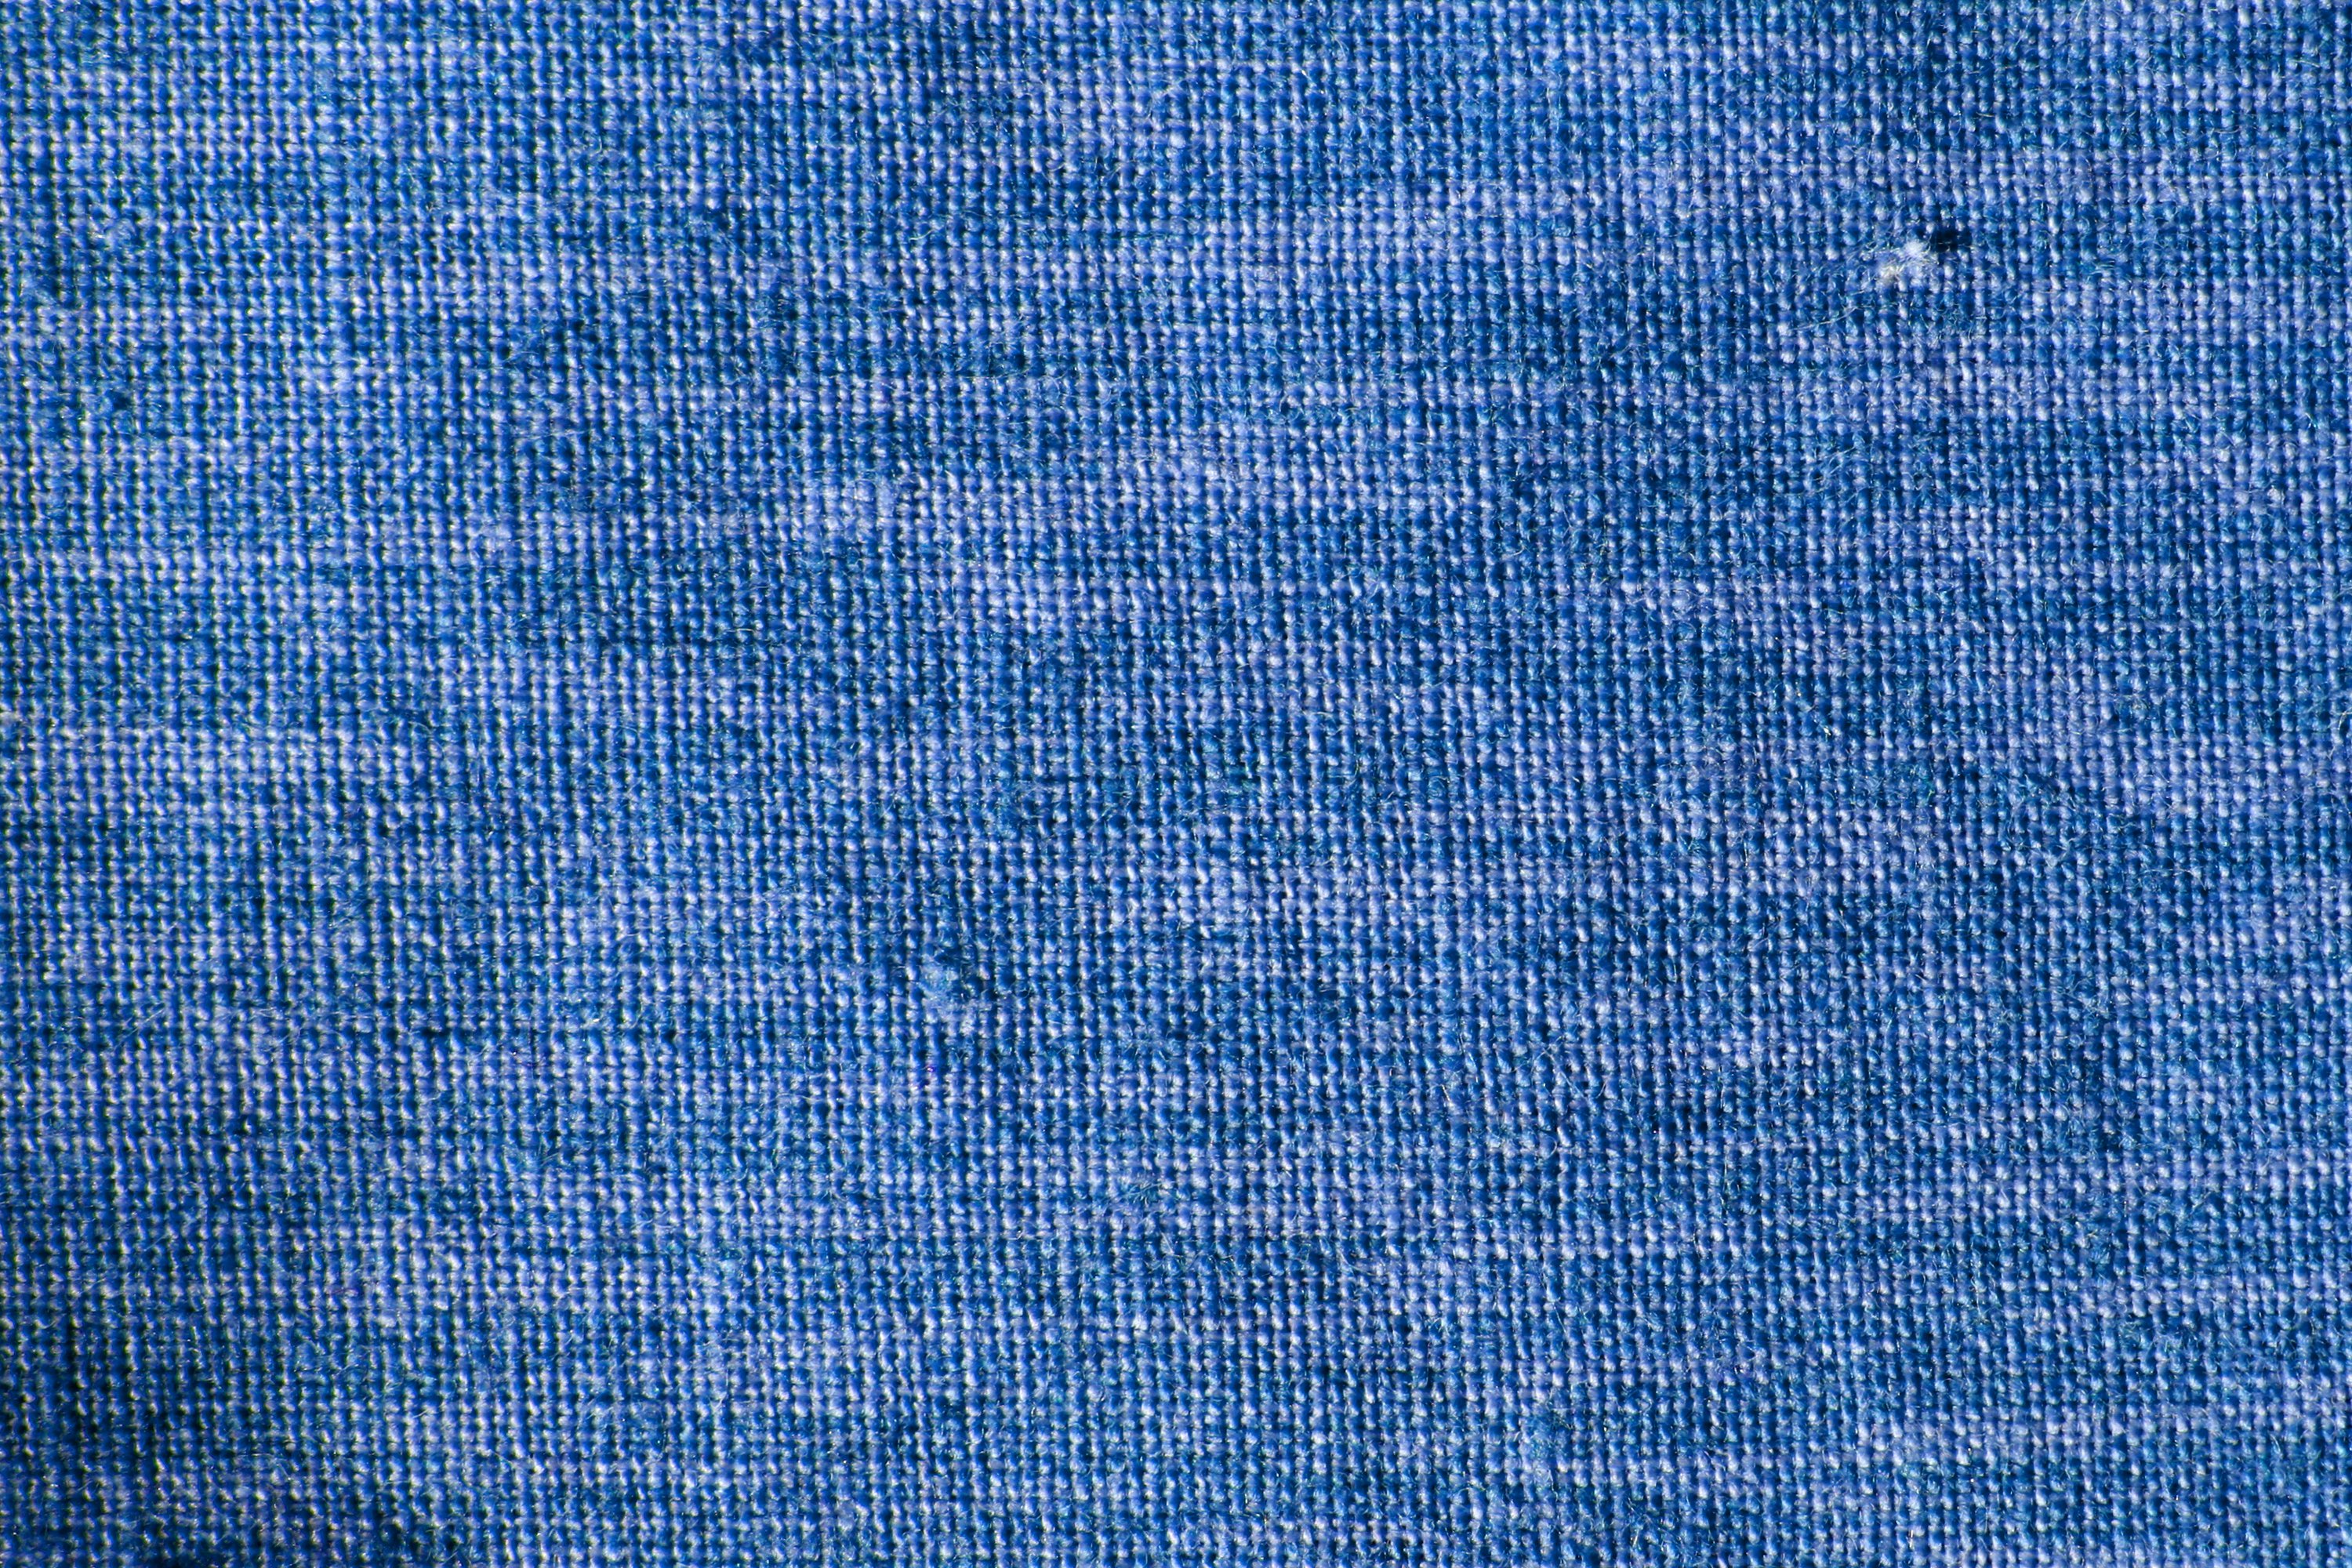 blue fabric background hi resolution jpg photoshop free download